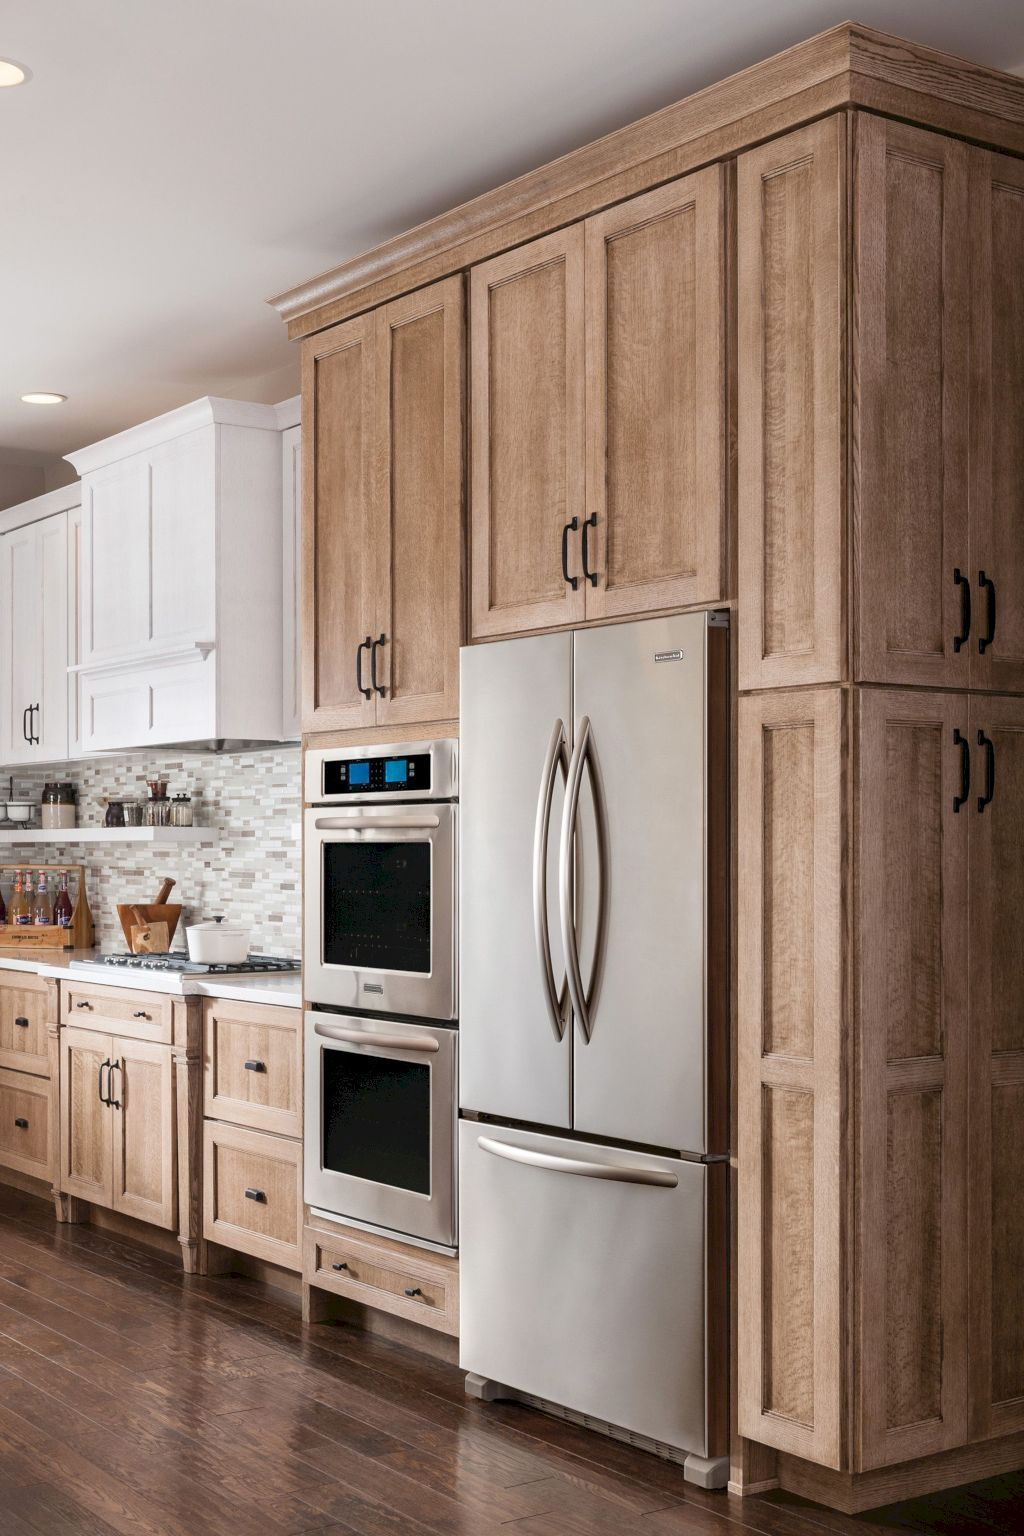 Charming Kitchen Cabinet Decorating Ideas21